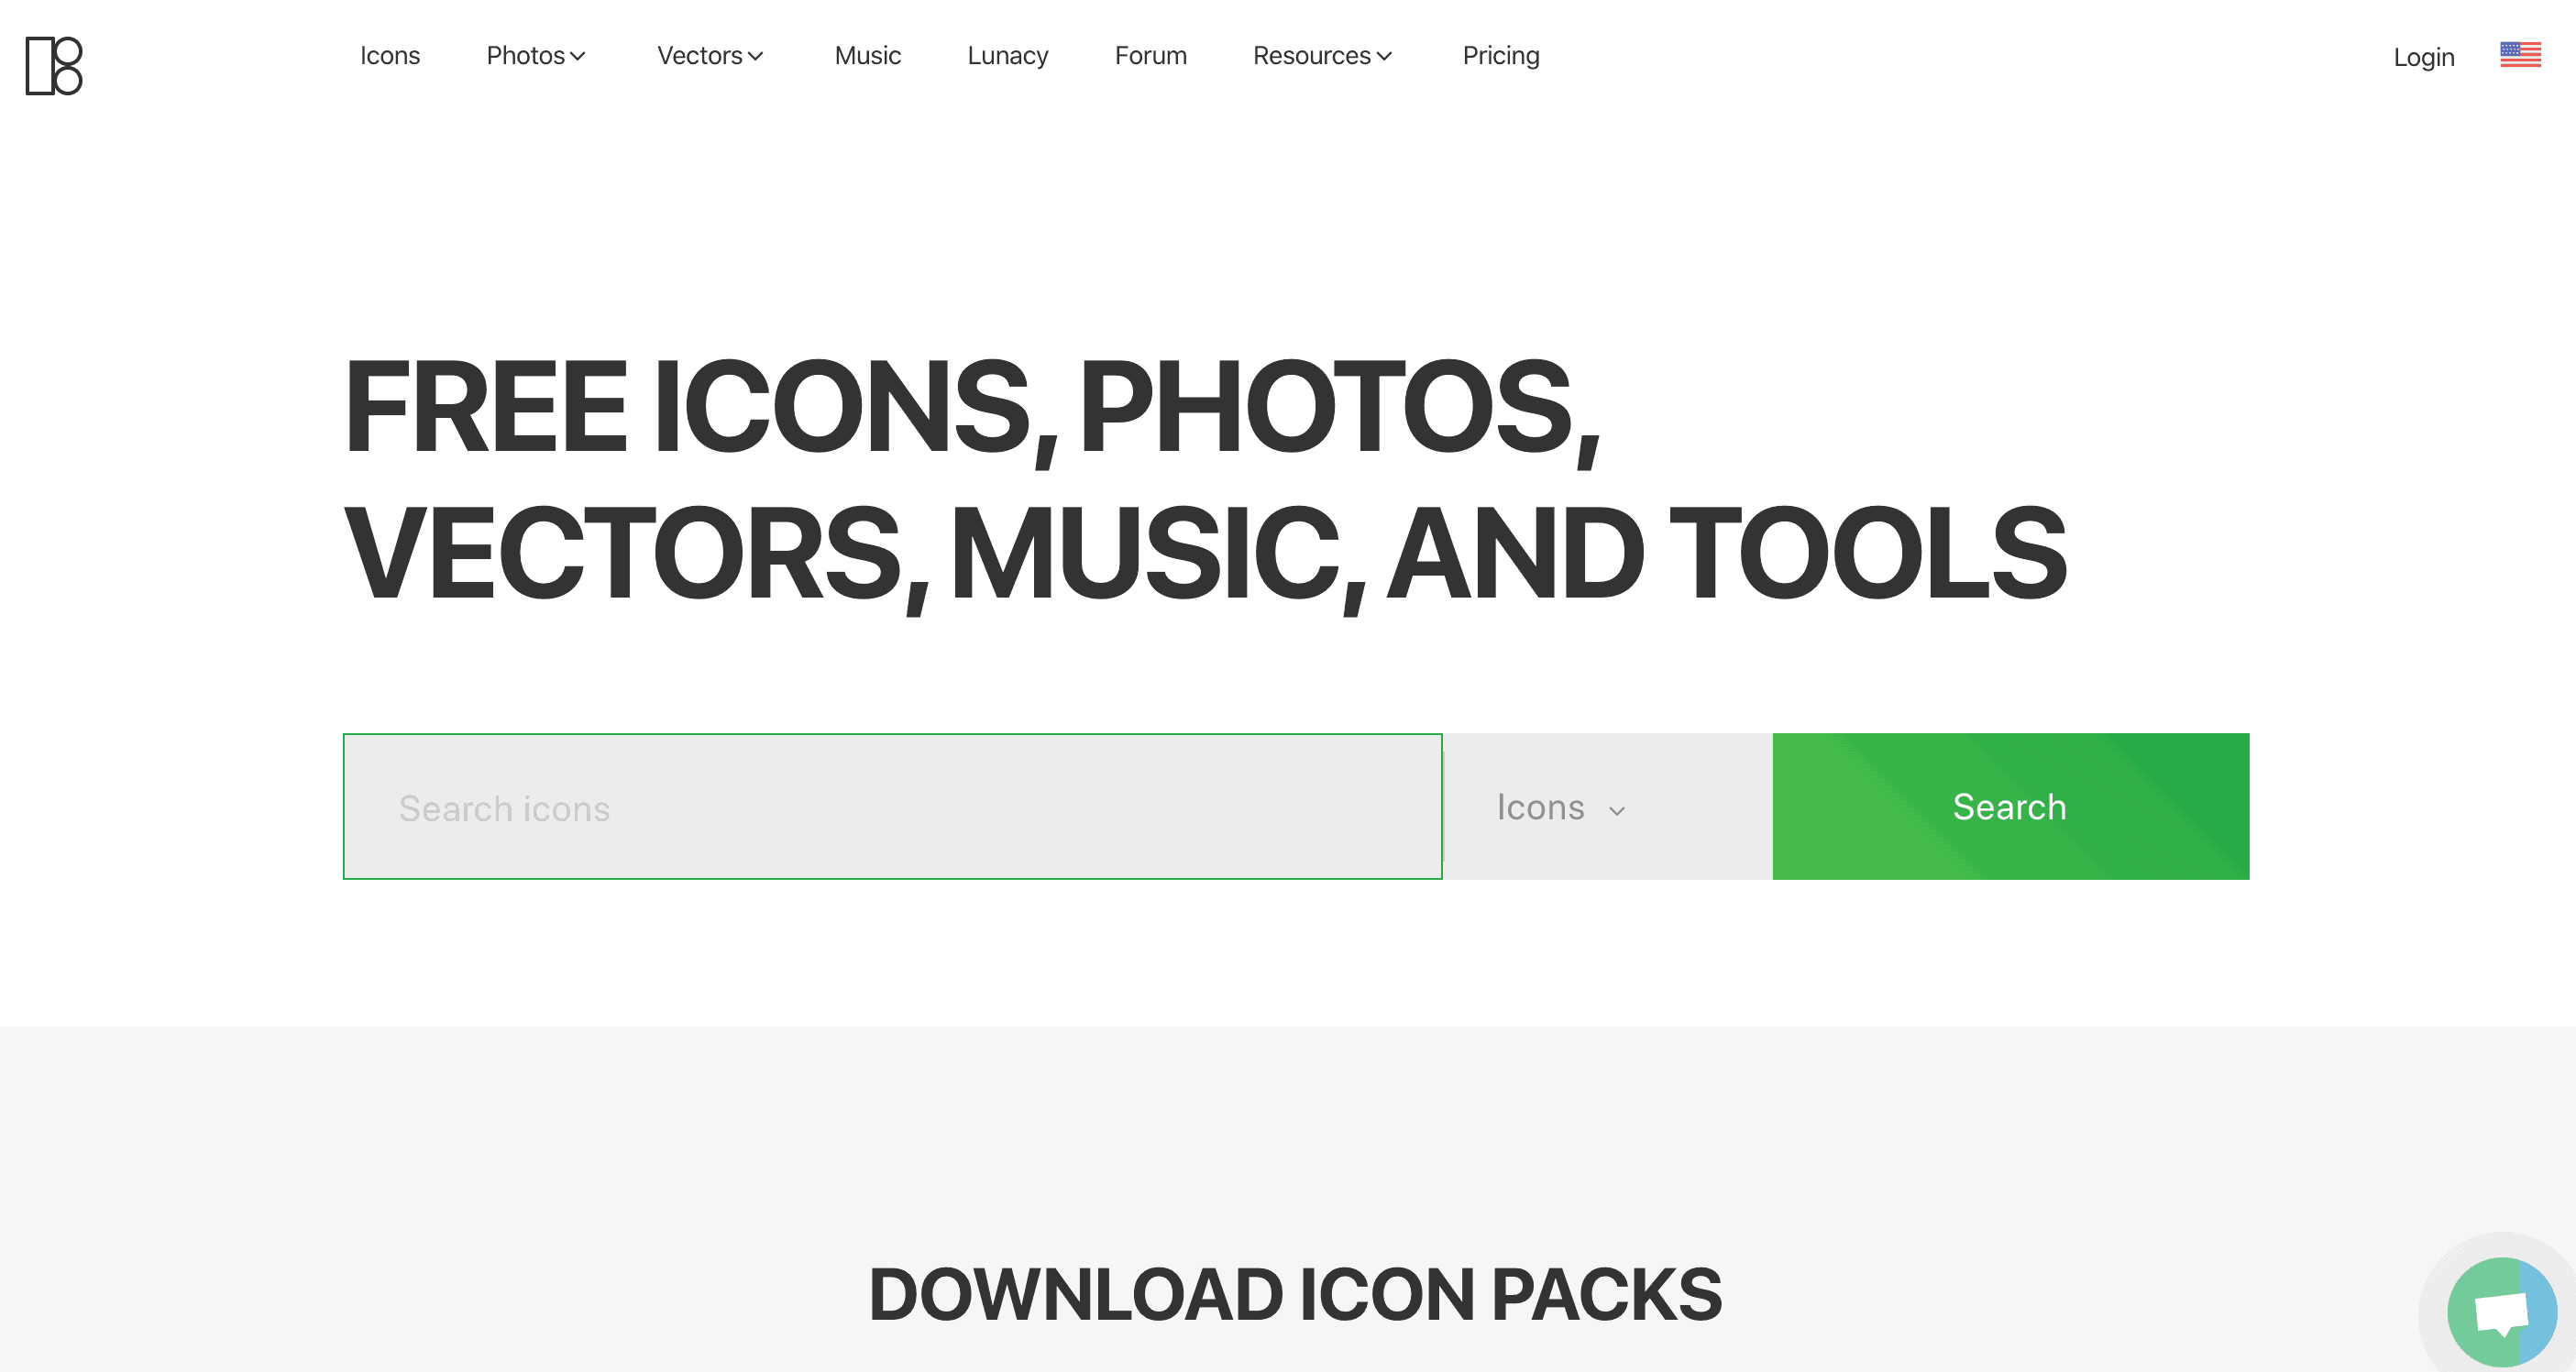 08 icon8 แจกฟรี icon free ที่มีแบบพิเศษตามเทศกาล